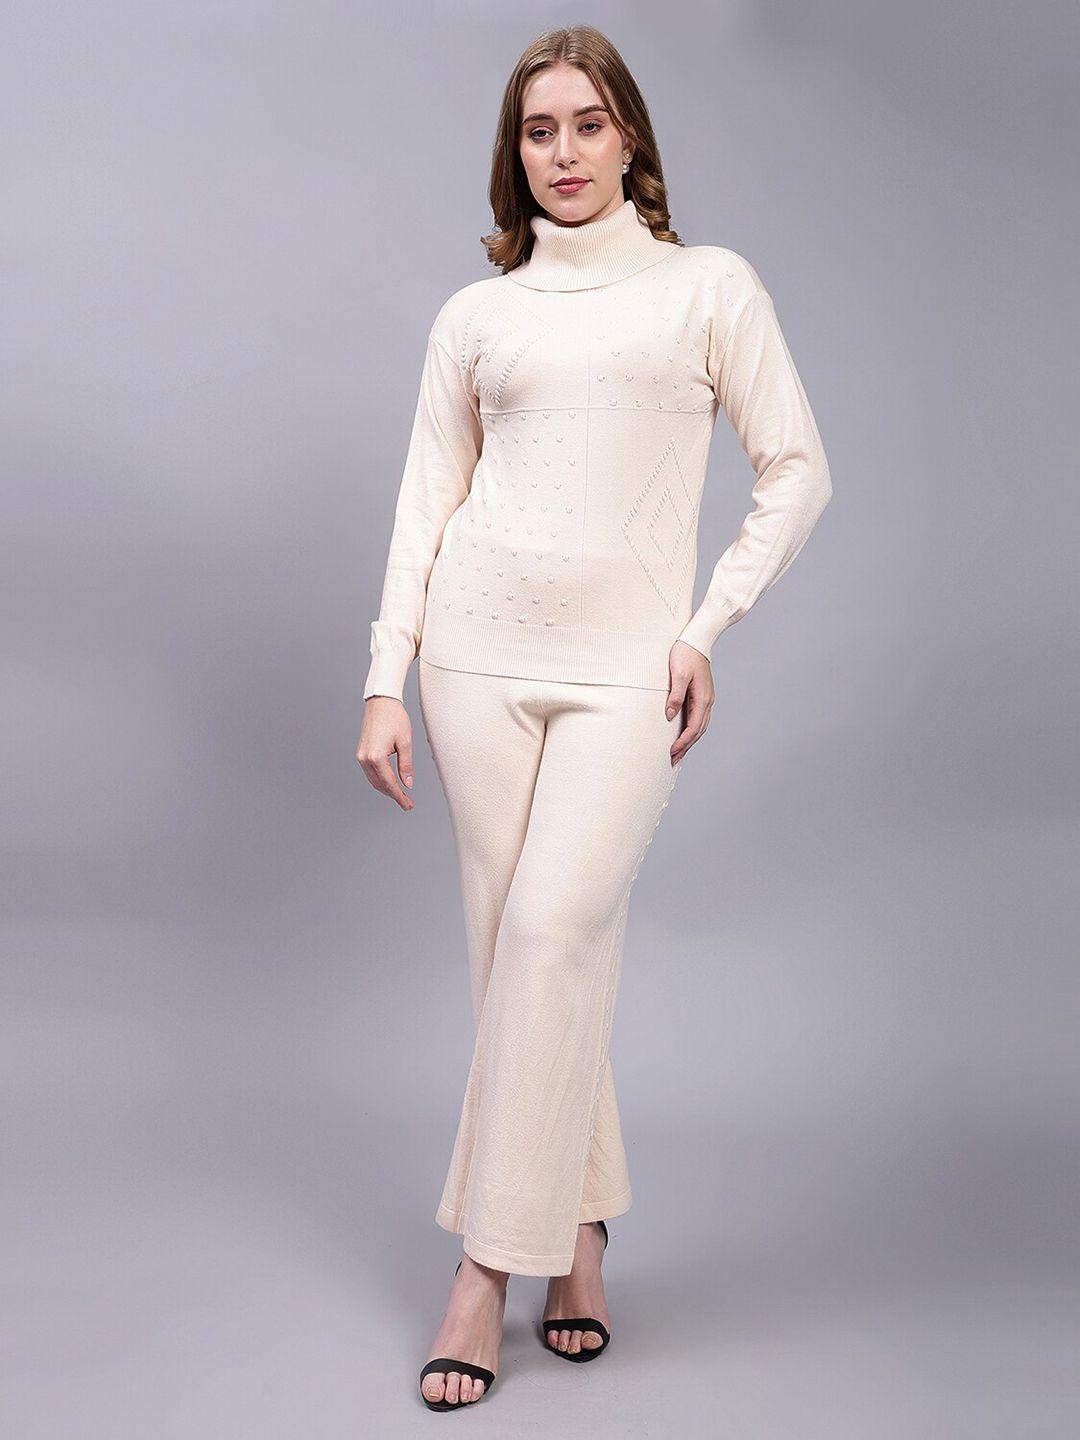 albion cream-coloured woollen long dress